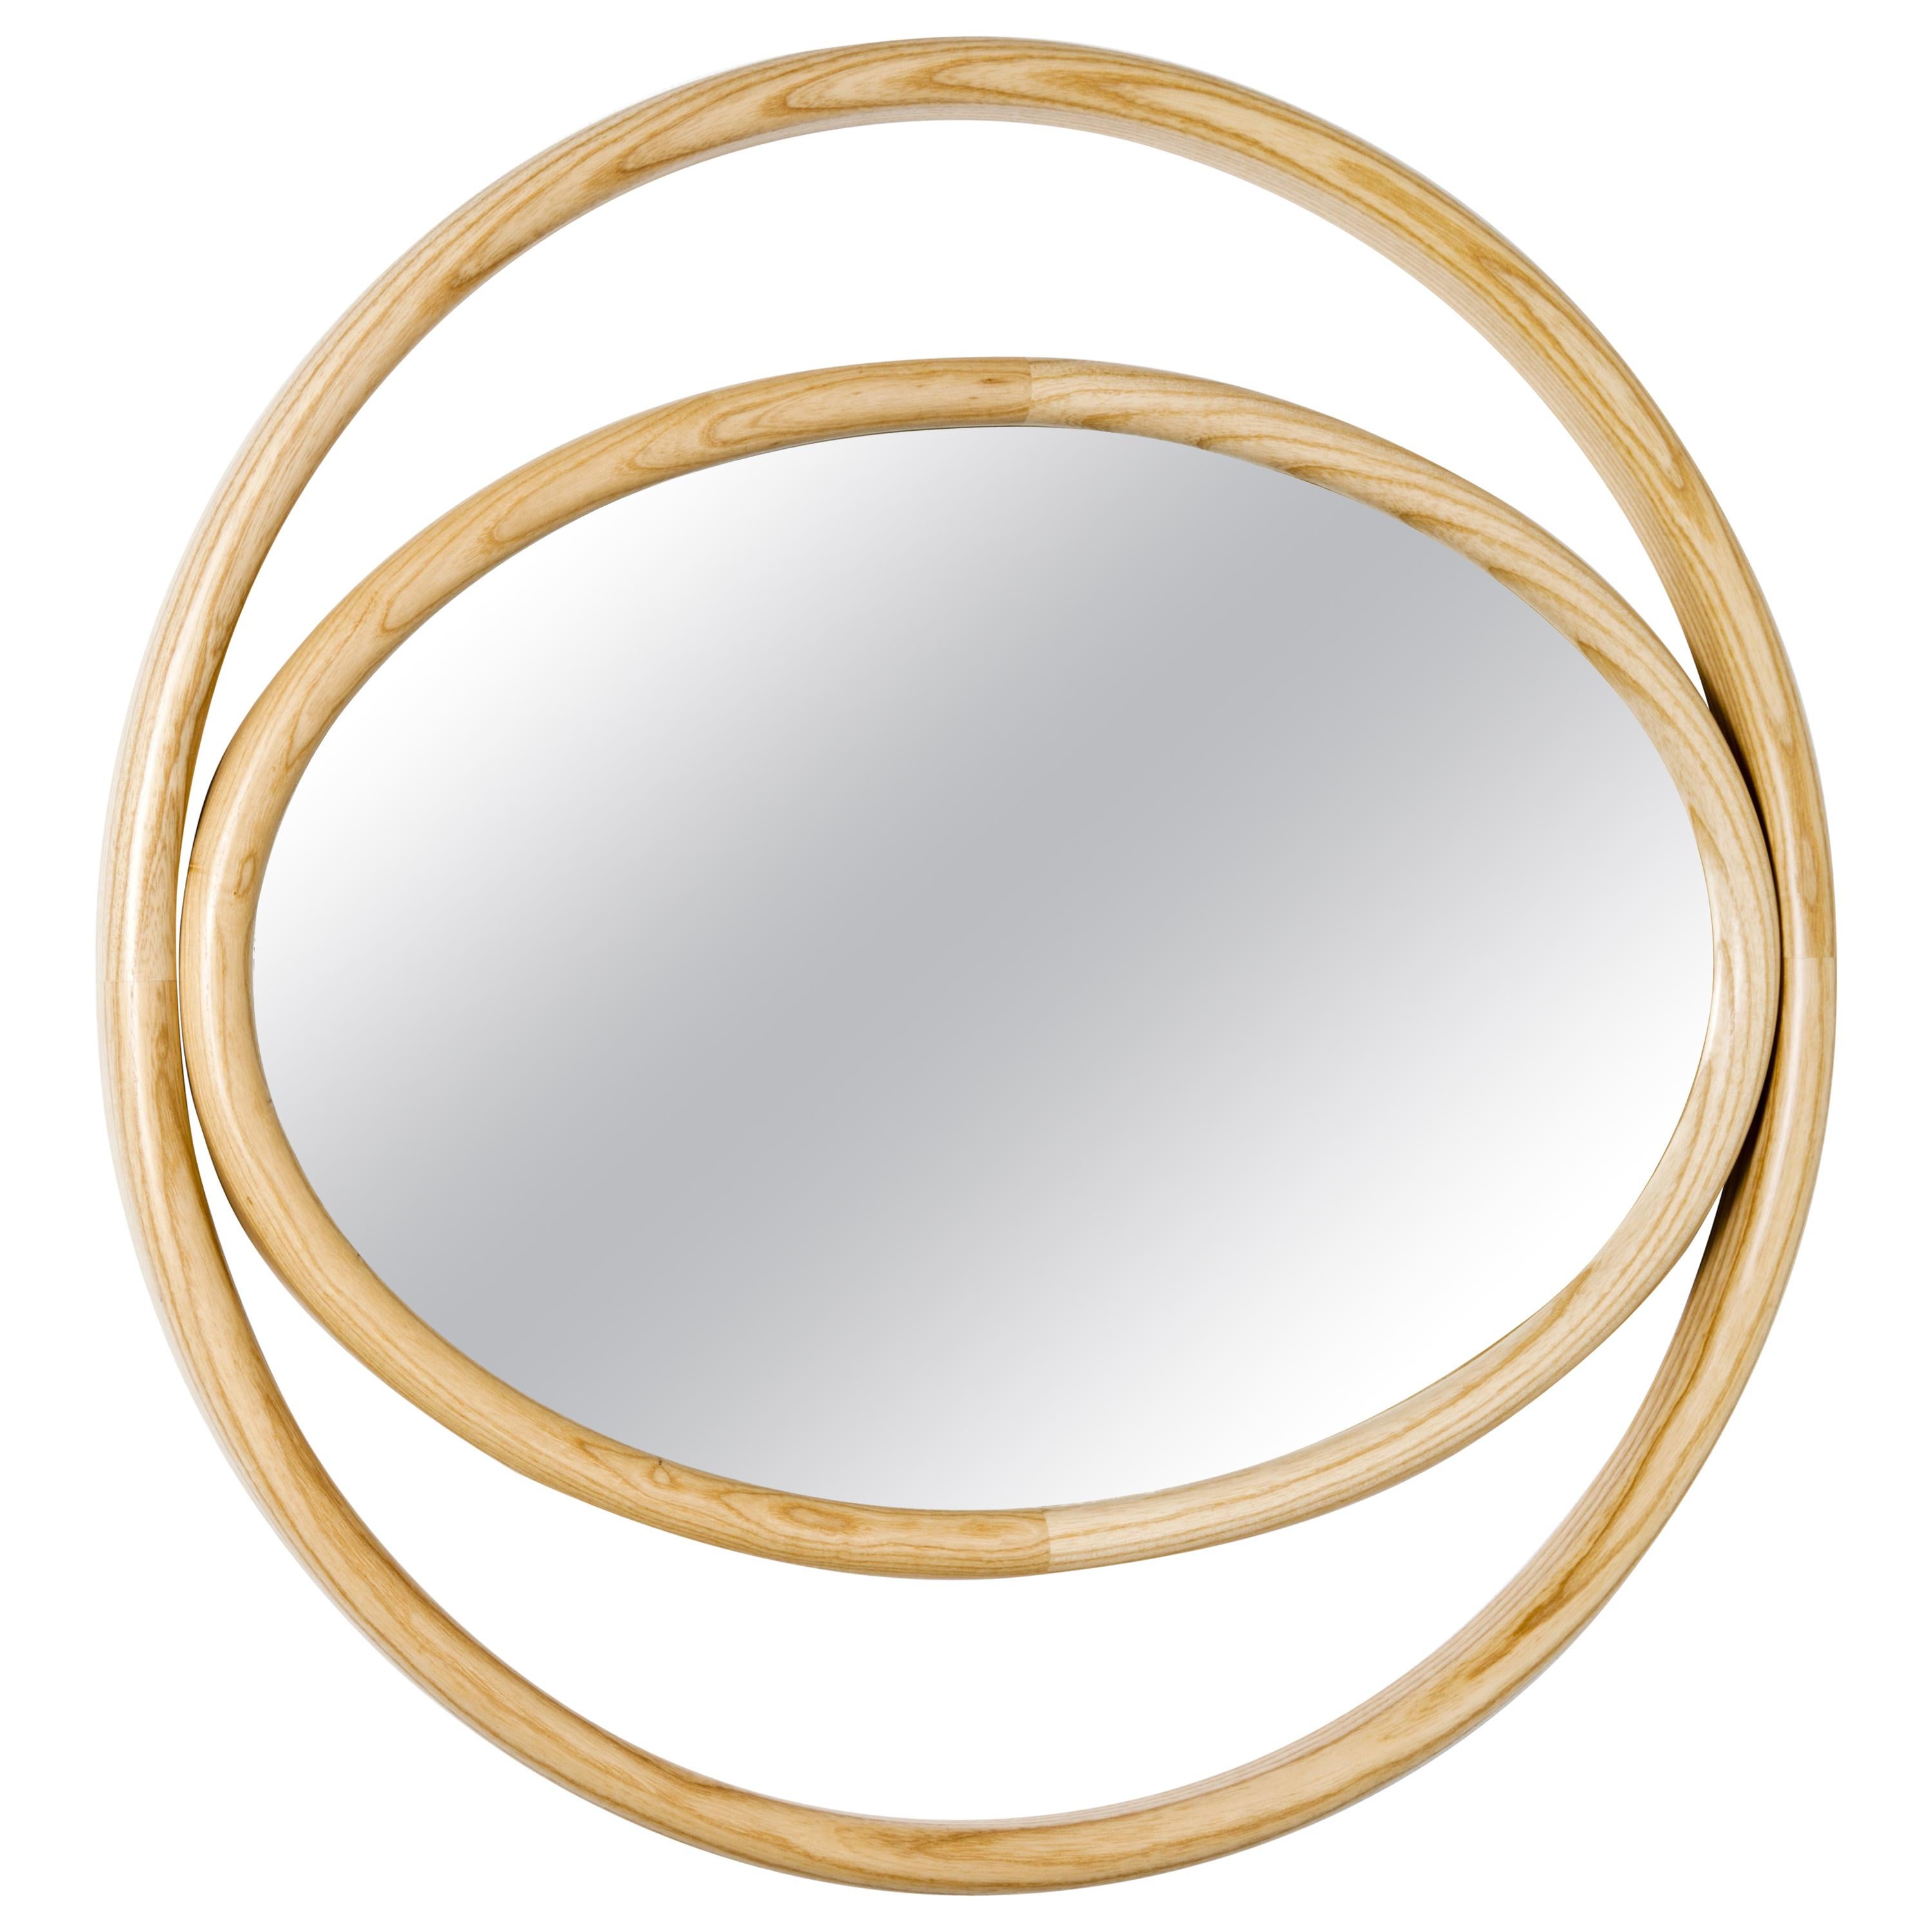 Gebrüder Thonet Vienna GmbH Eyeshine Large Circular Mirror with Ash Wood Frame For Sale